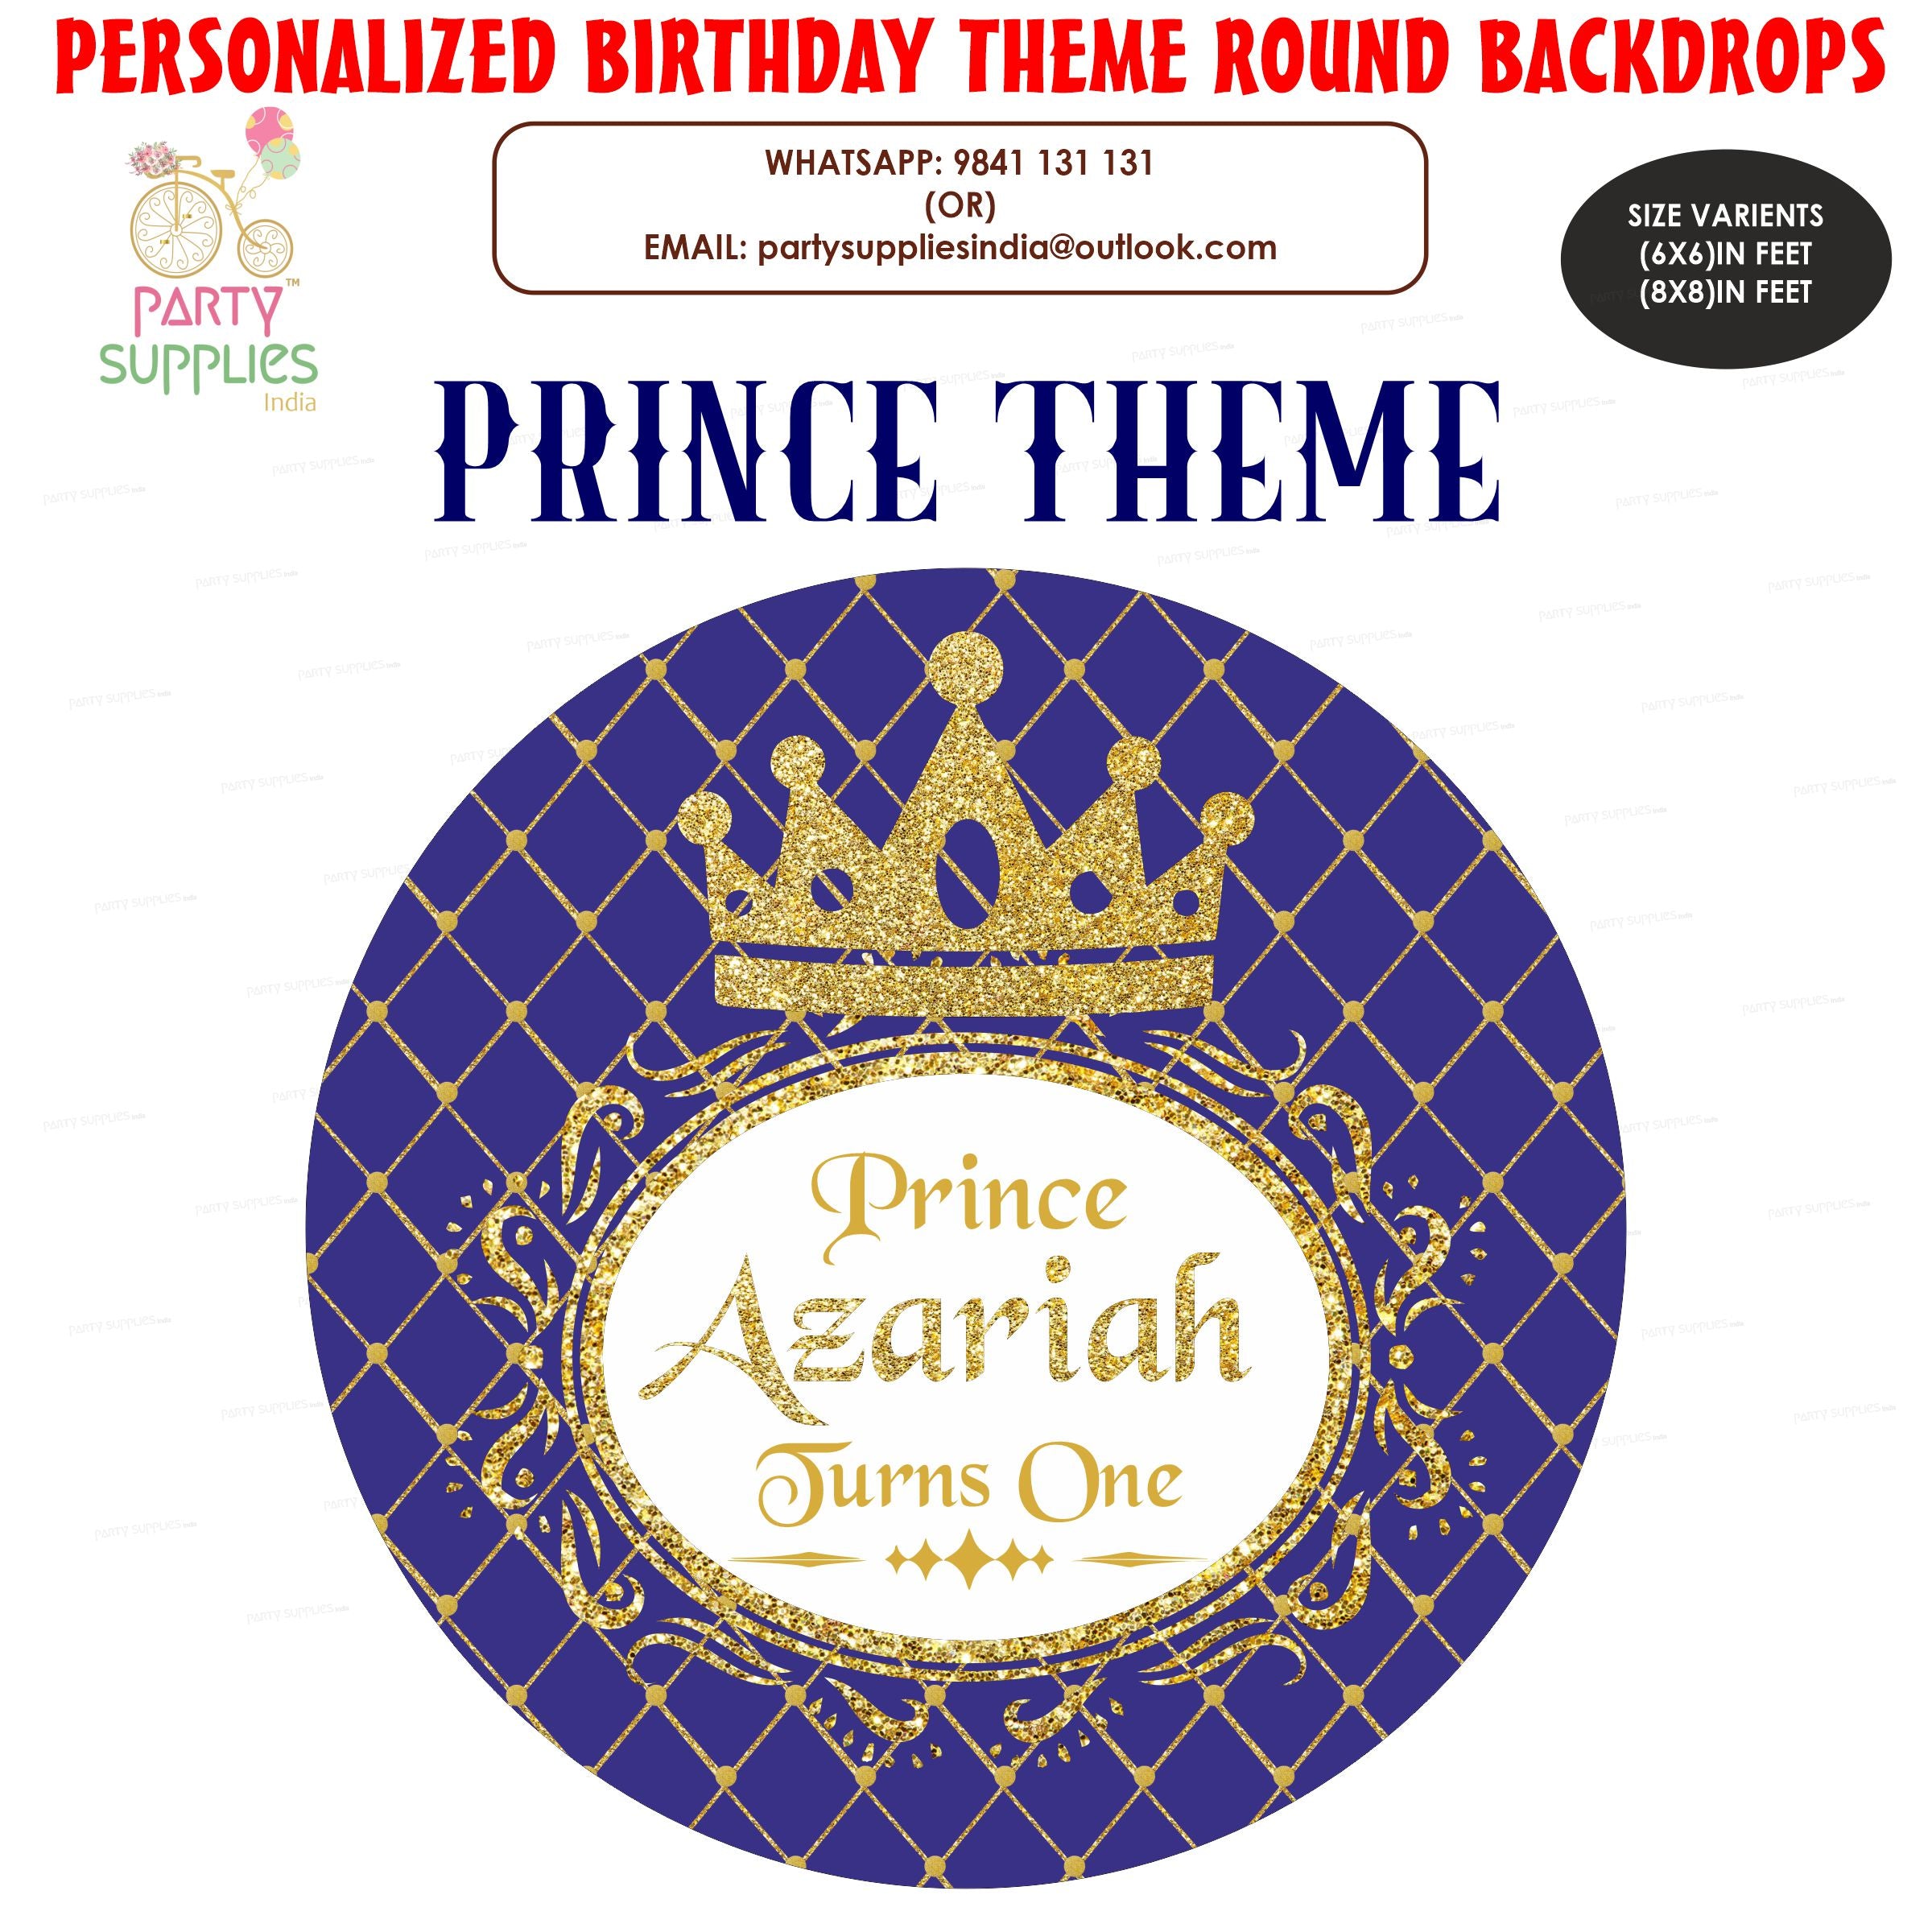 Prince Theme Personalized Round Backdrop